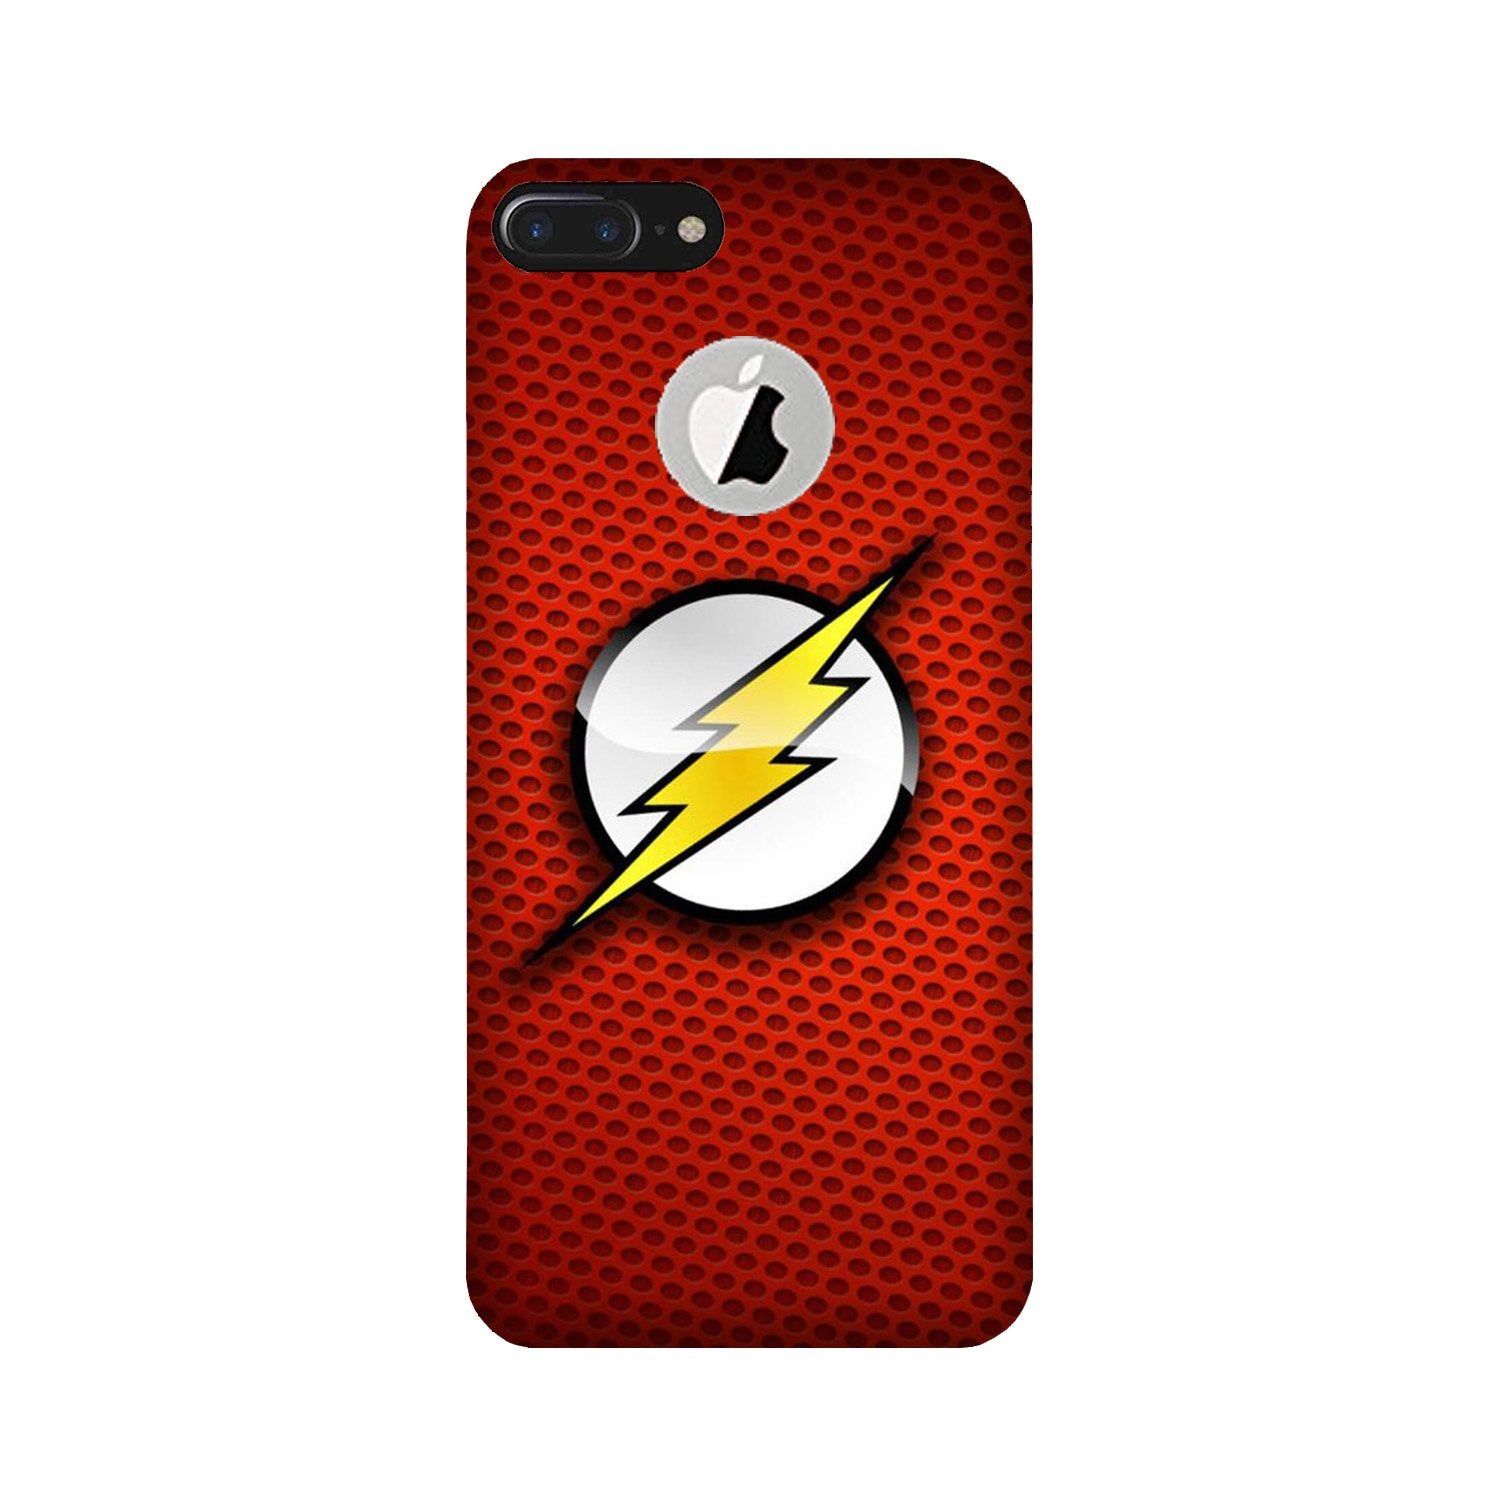 Flash Case for iPhone 7 Plus logo cut (Design No. 252)